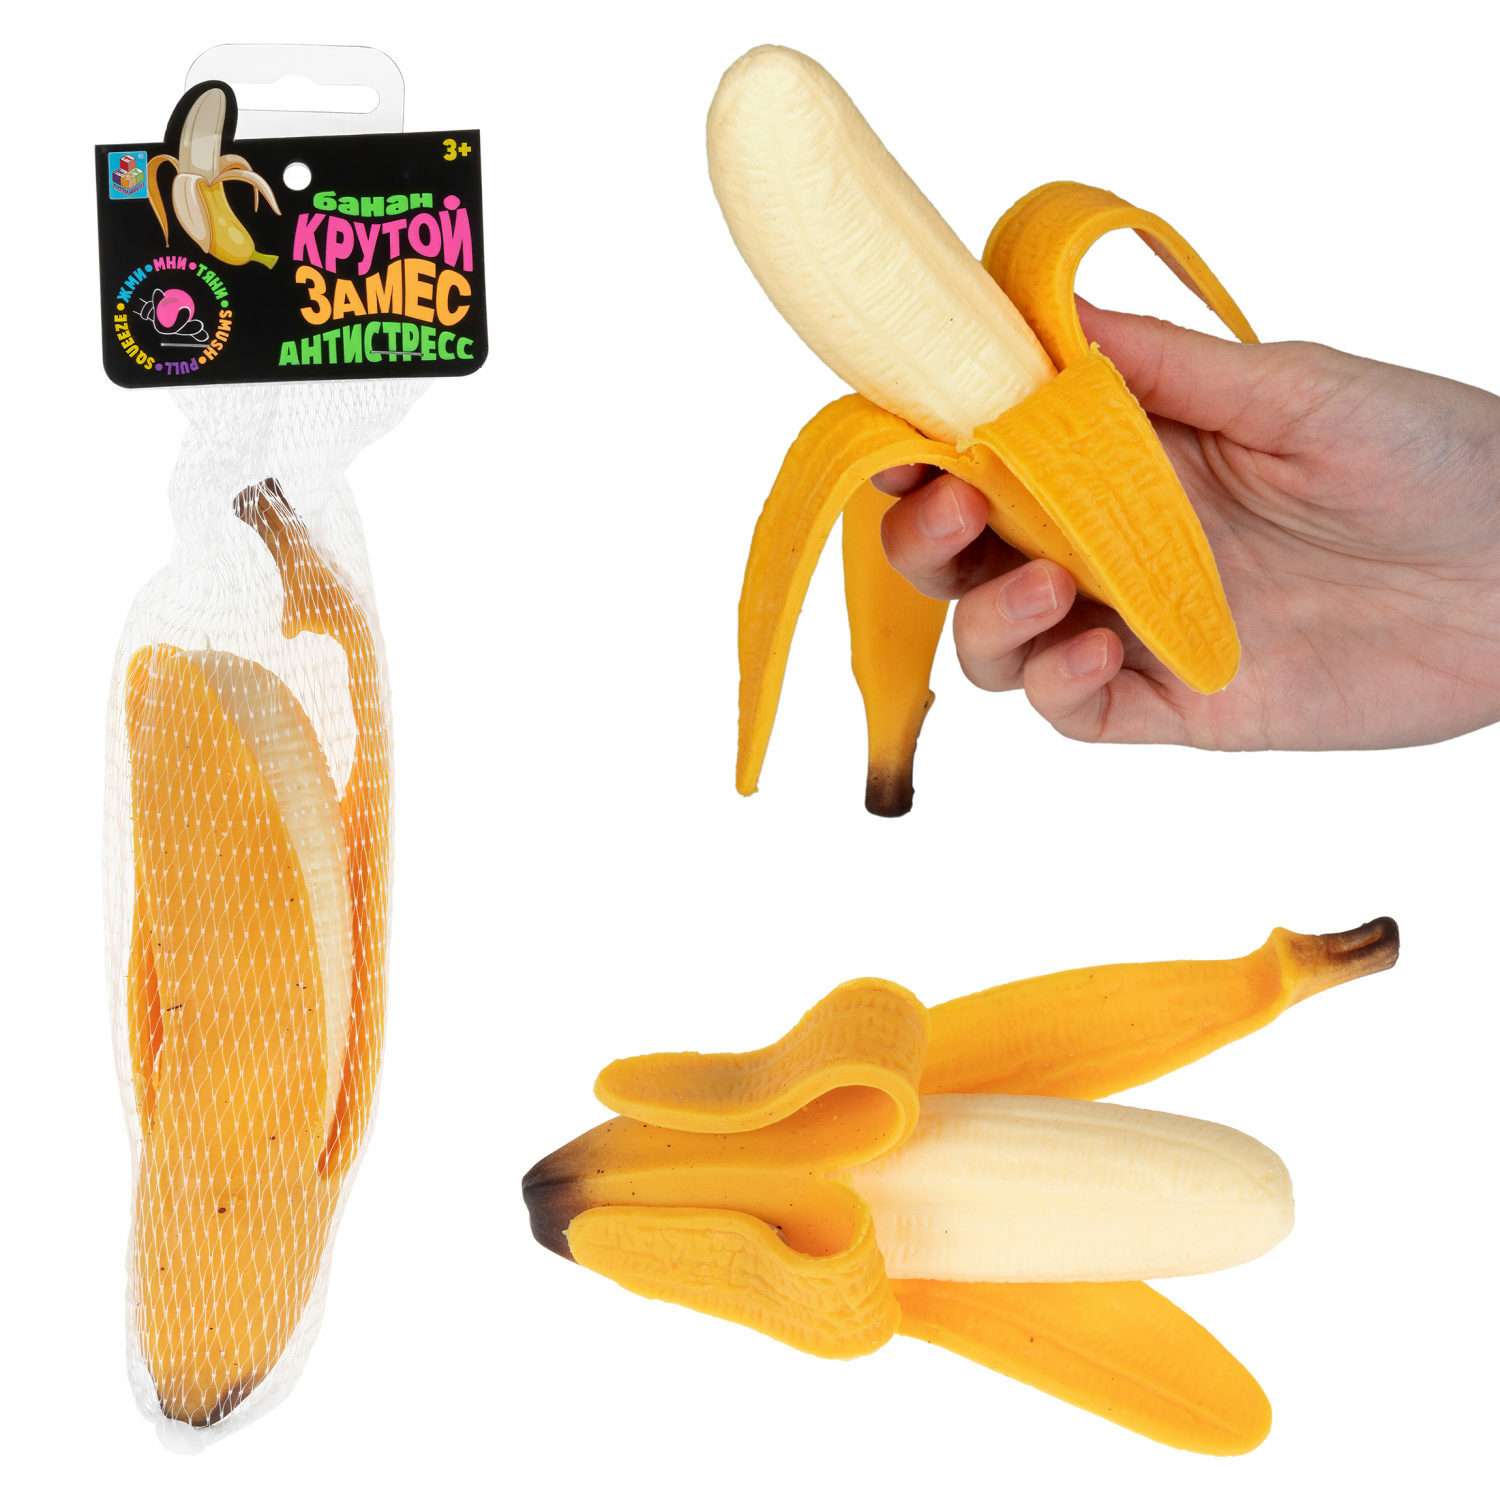 Антистресс Банан Крутой замес 1TOY игрушка для рук жмякалка мялка тянучка 1 шт - фото 3